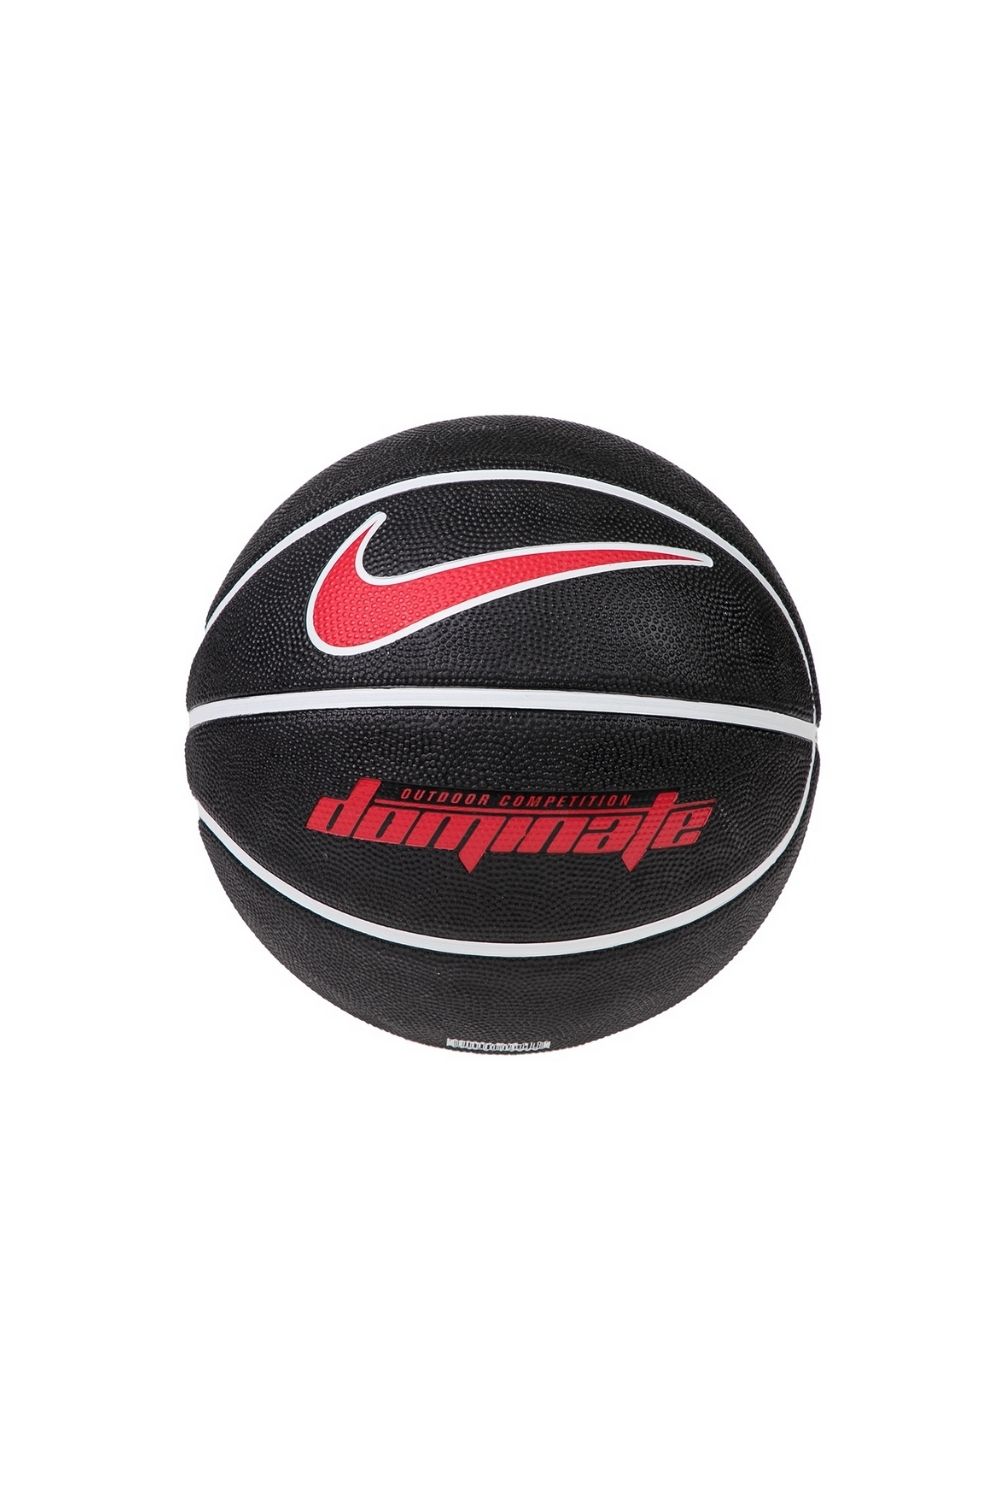 NIKE - Μπάλα μπάσκετ NIKE DOMINATE 8P μαύρη κόκκινη Ανδρικά/Αξεσουάρ/Αθλητικά Είδη/Μπάλες